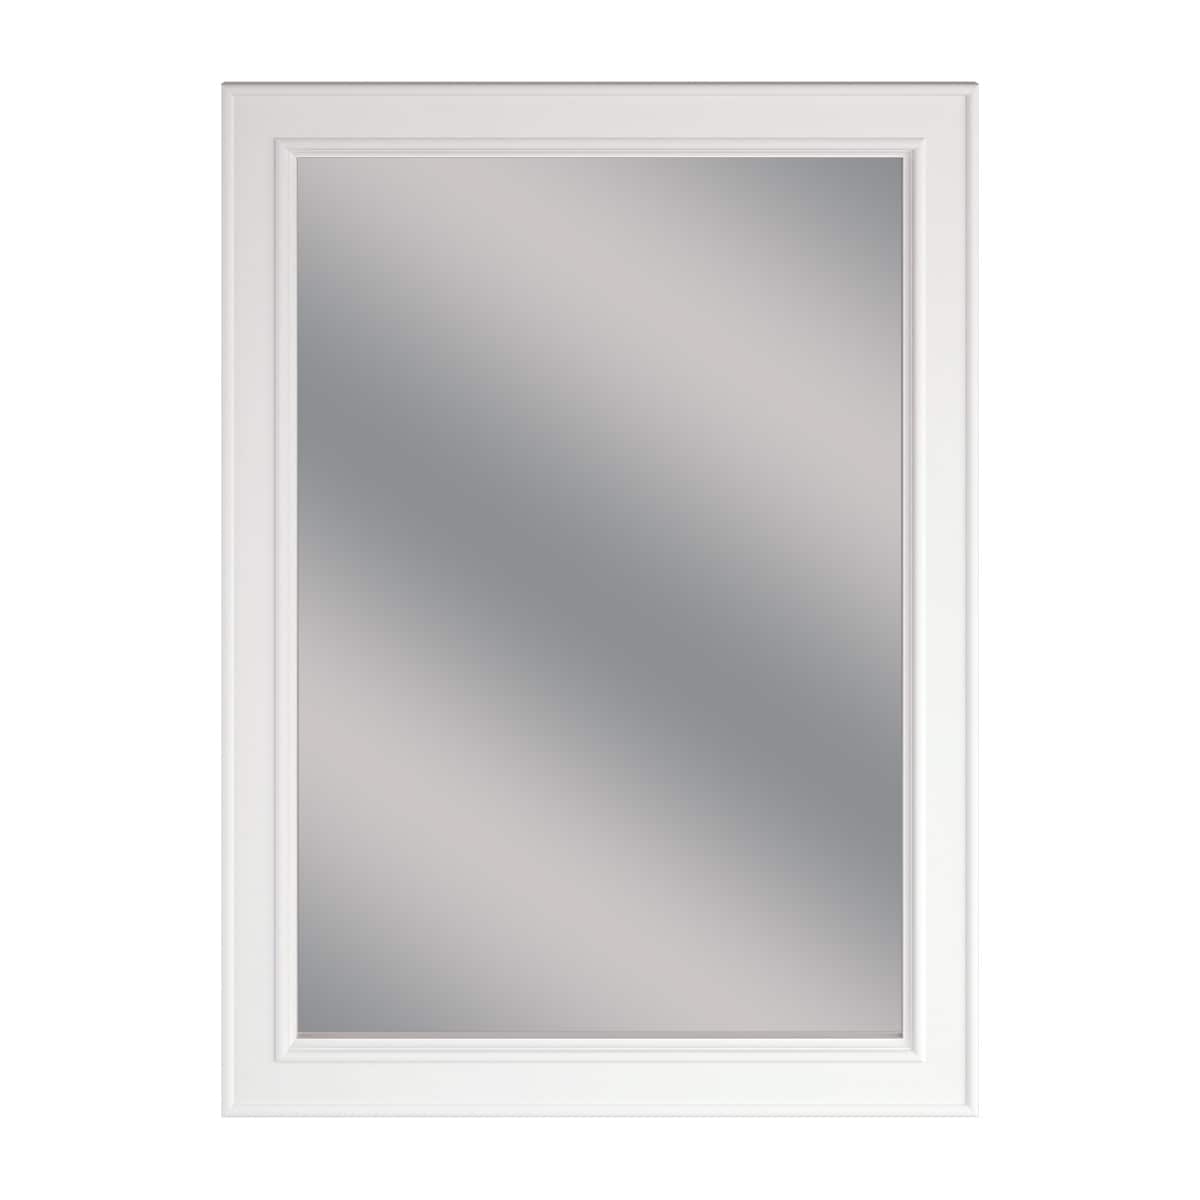 Wrightsville 22-in x 30-in White Rectangular Framed Bathroom Vanity Mirror | - allen + roth 1116MR-22-201